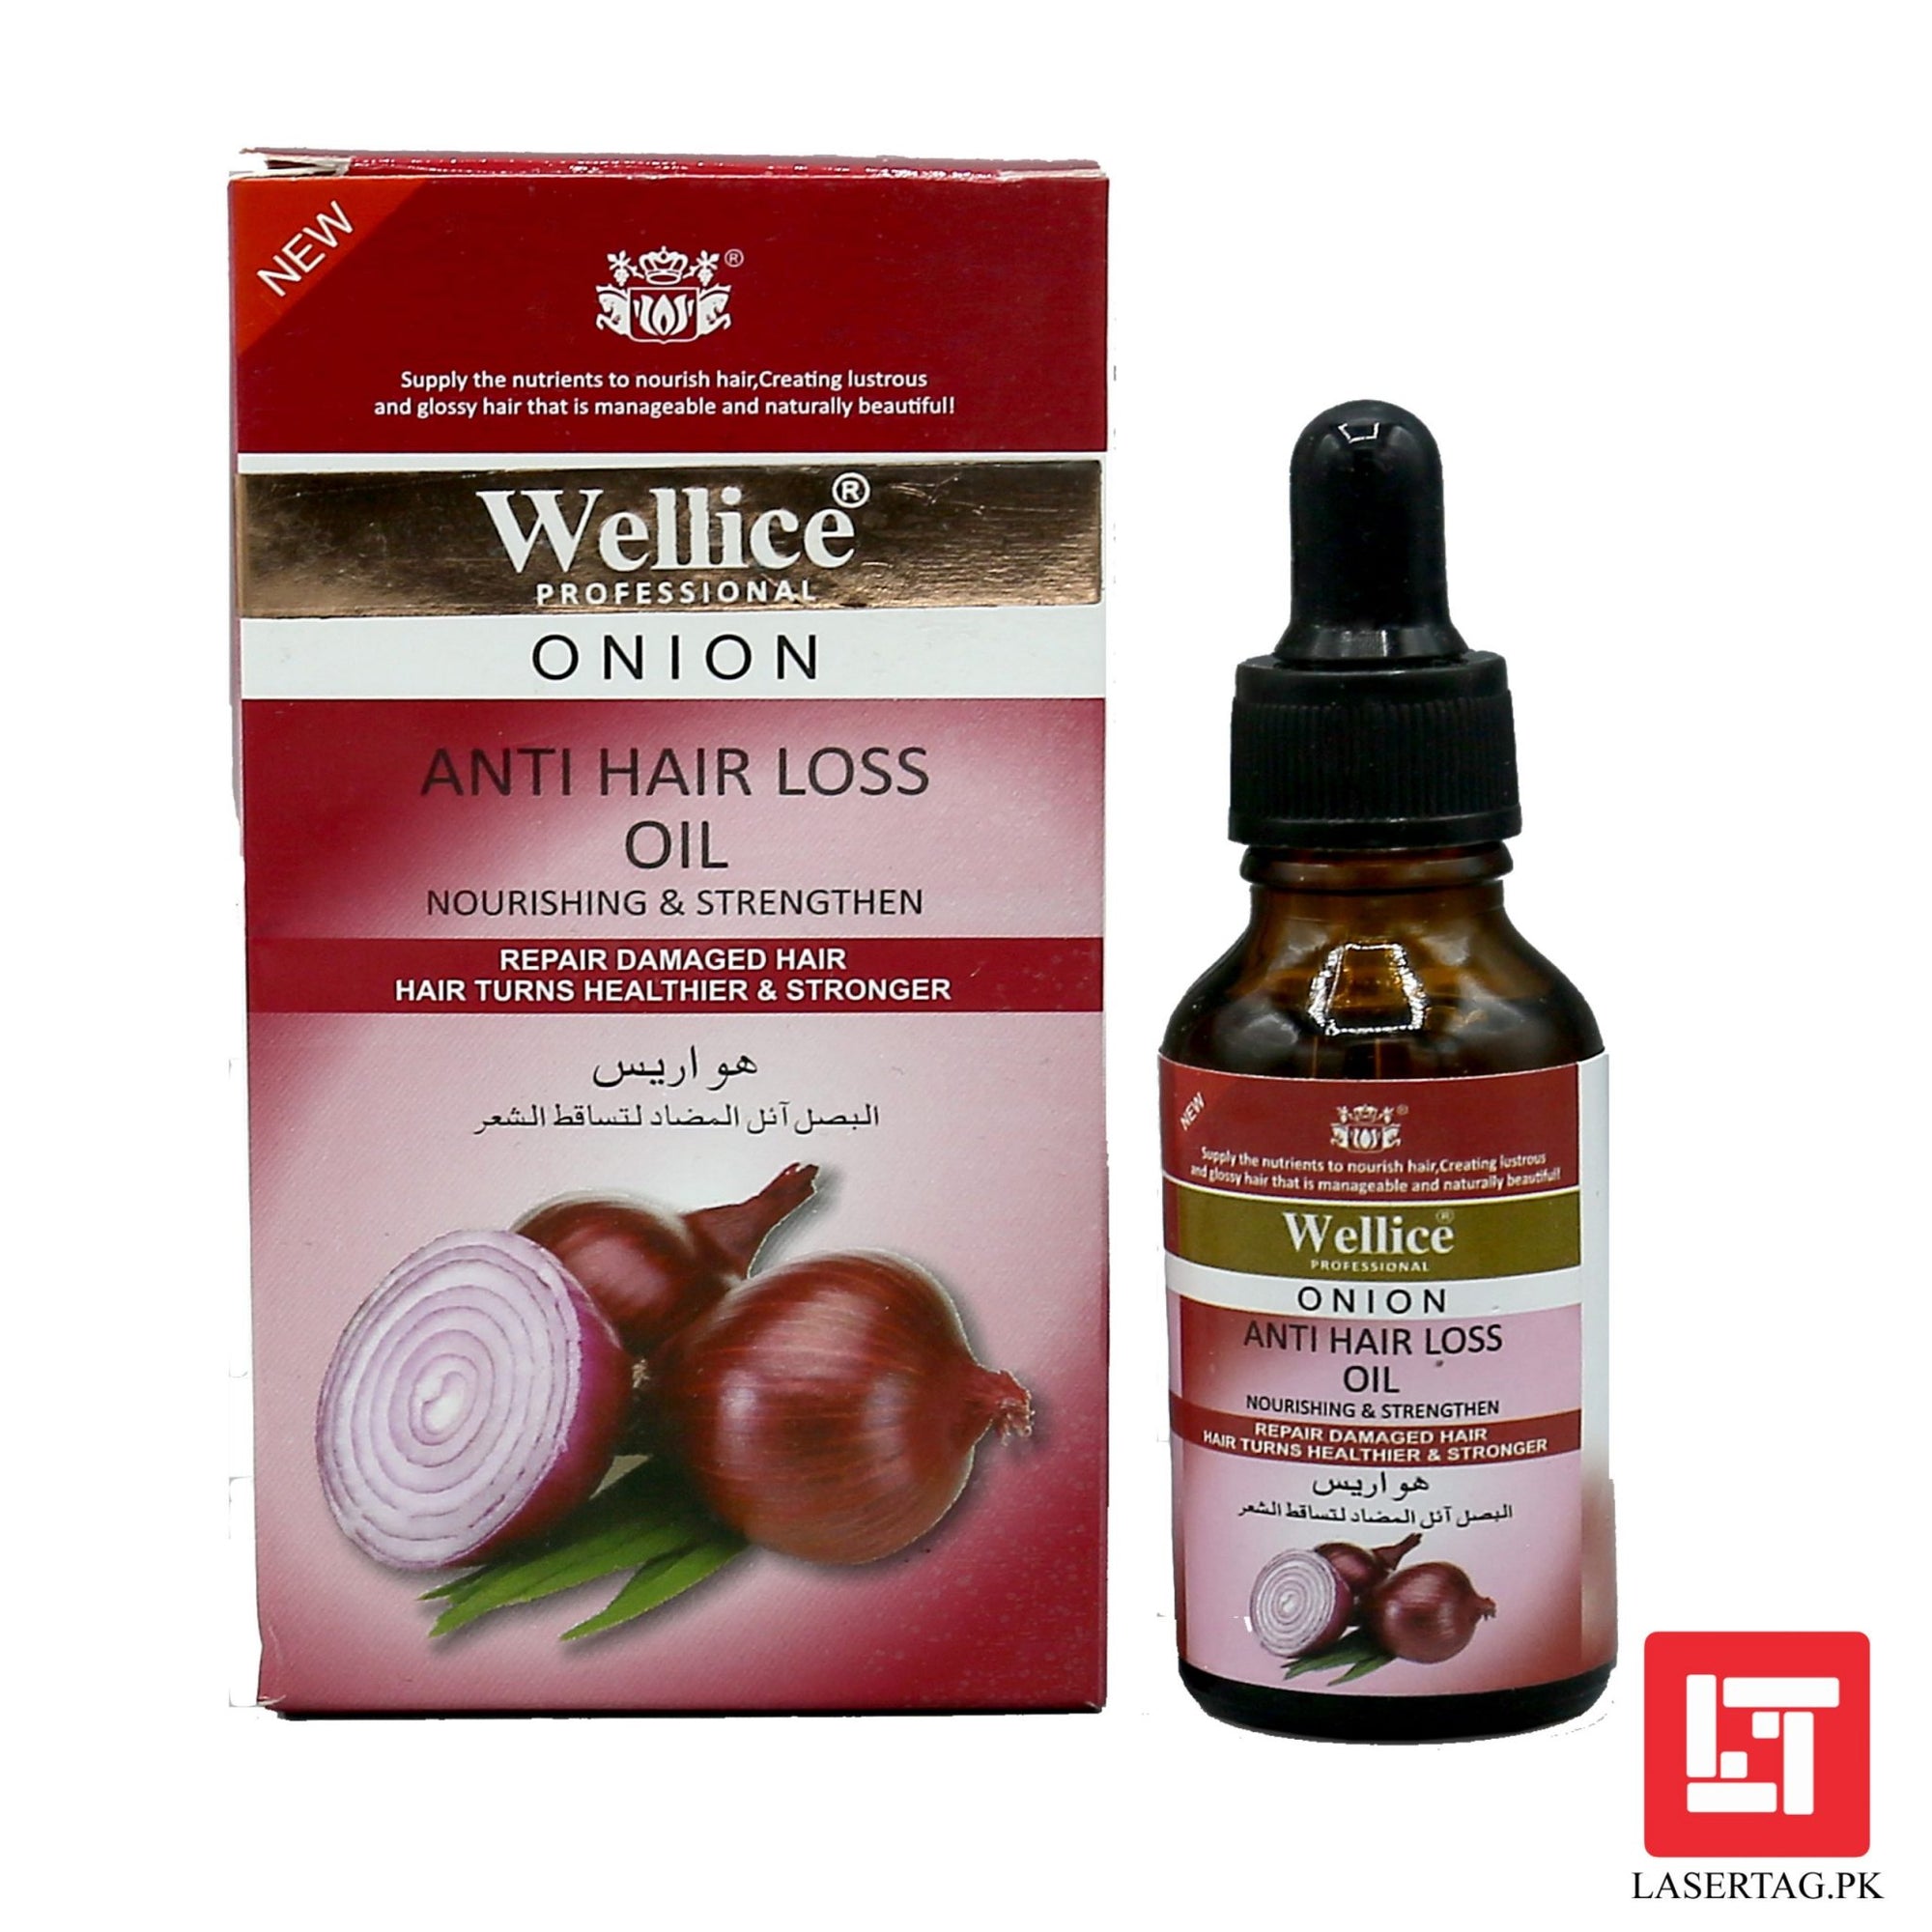 Wellice Onion Anti Hair Loss Oil Onion Oil Nourishing & Strengthen 30ml freeshipping - lasertag.pk